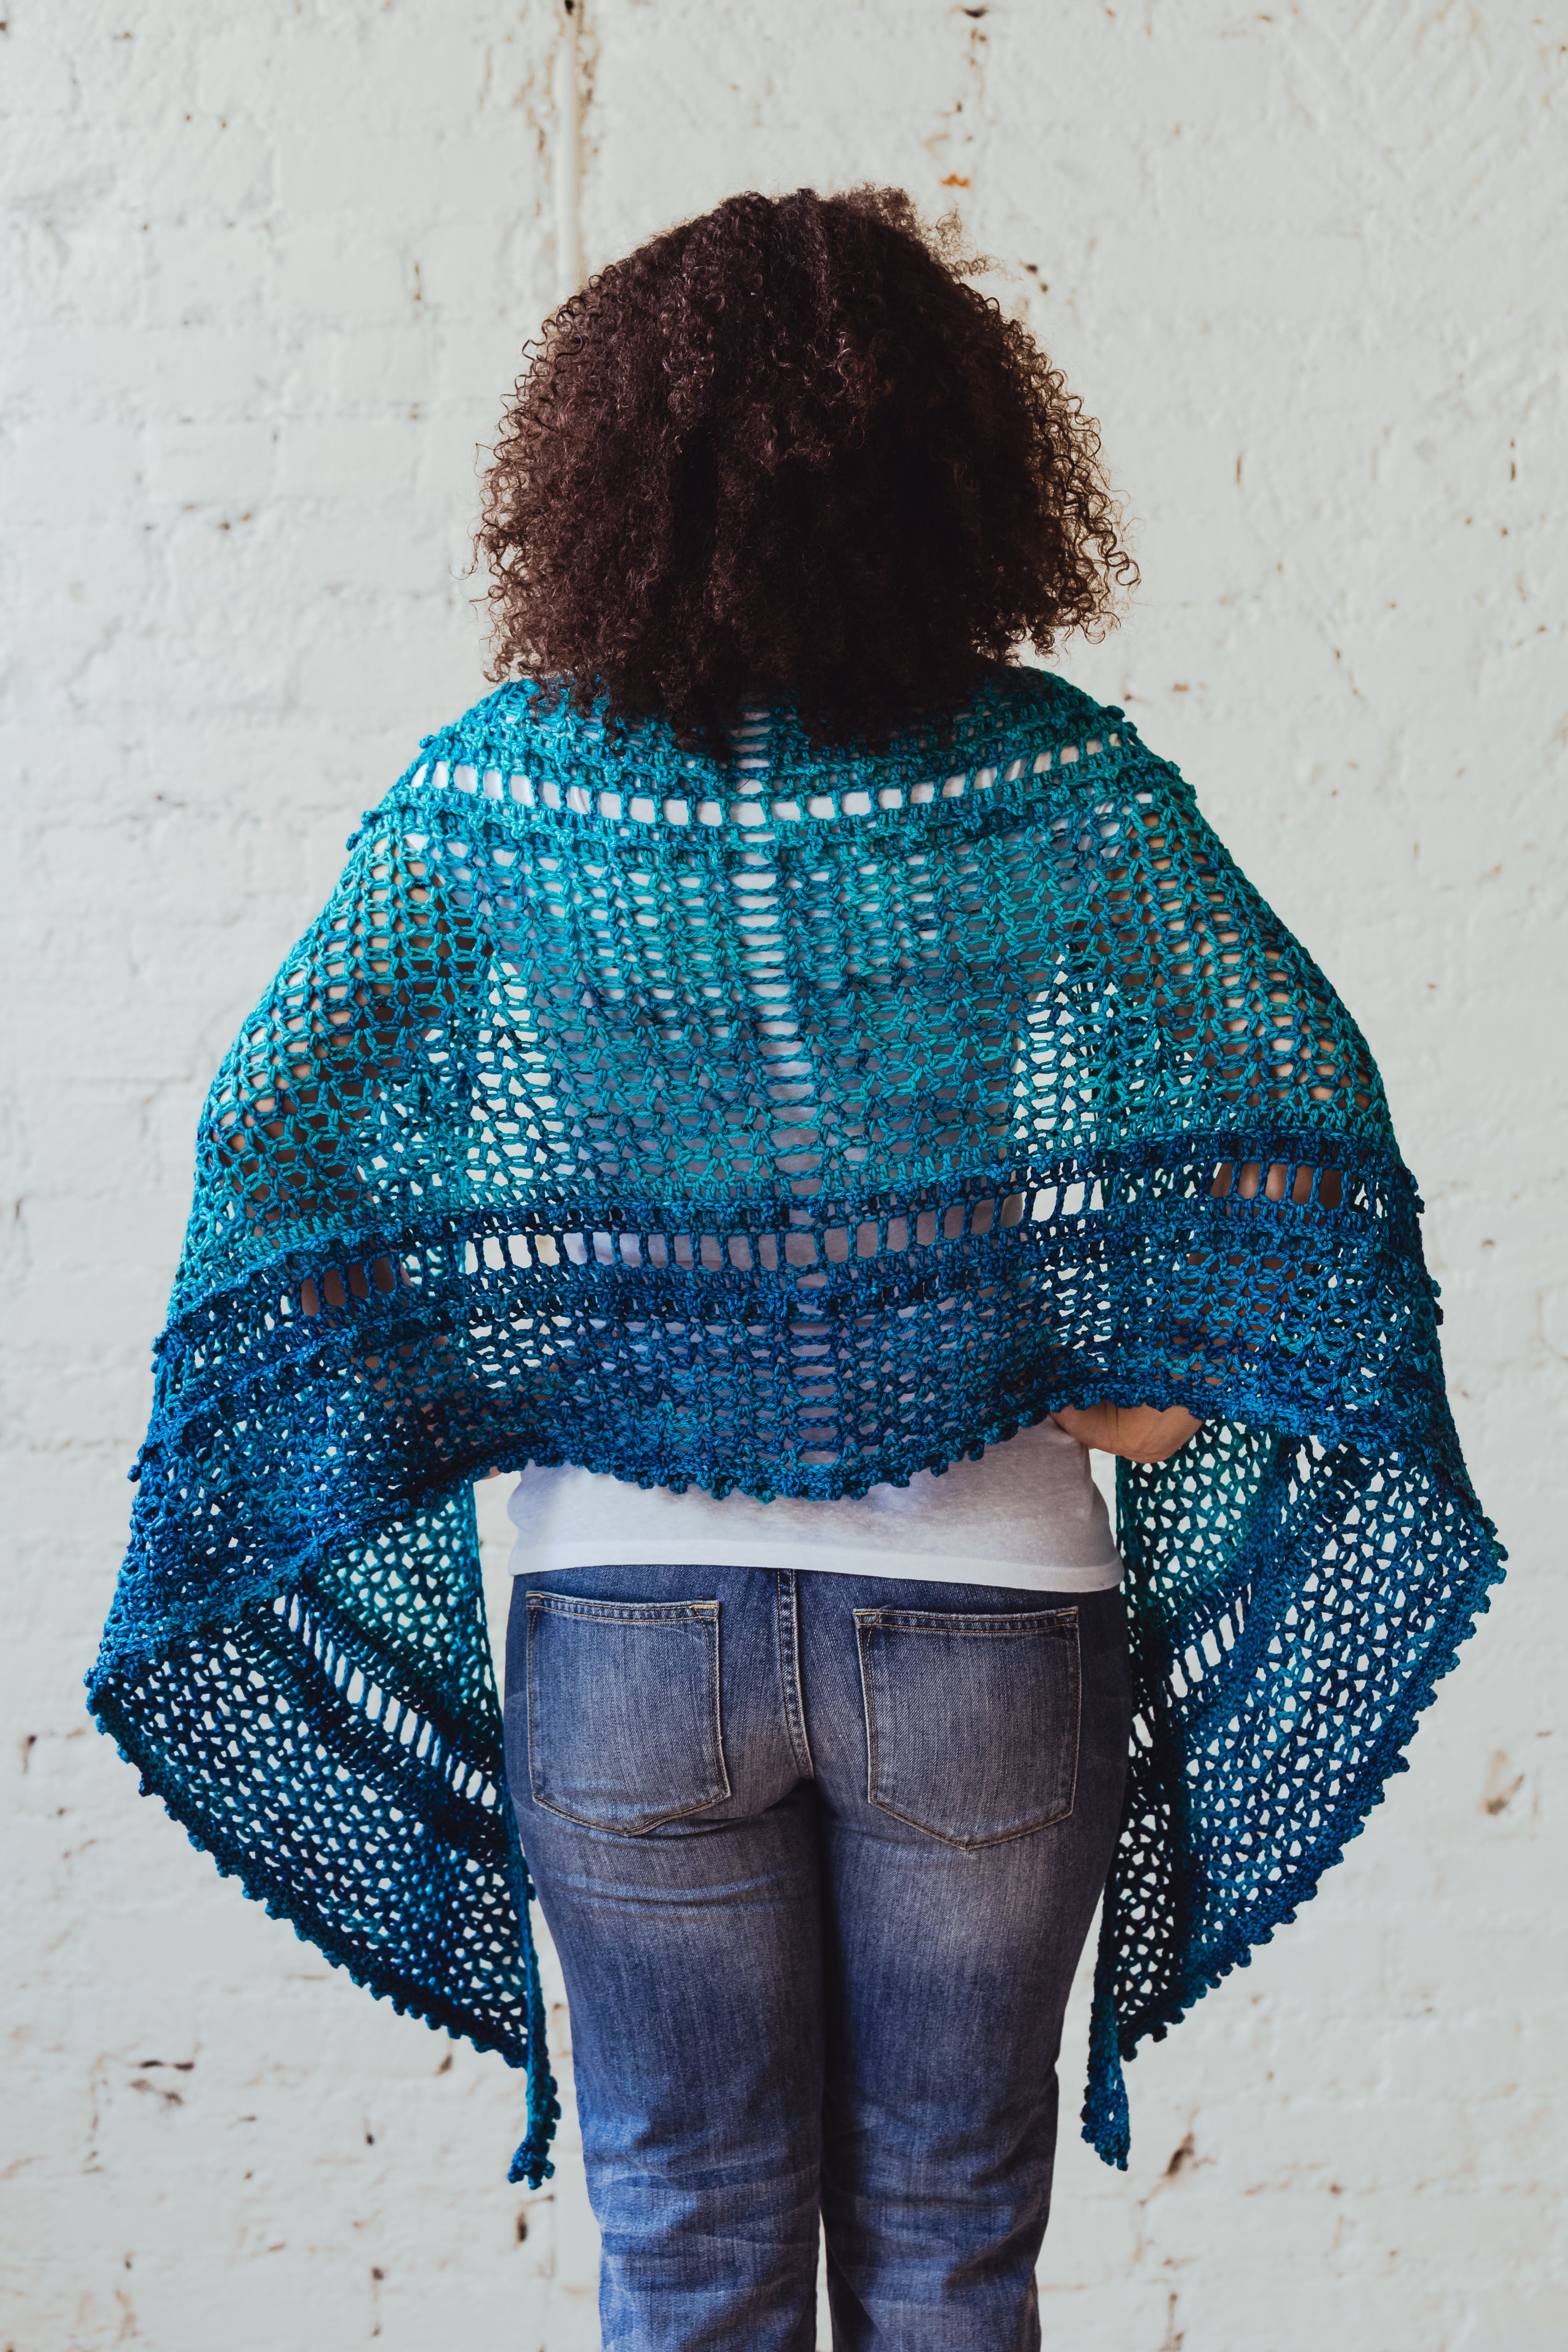 Serenity Shawl // Crochet PDF Pattern